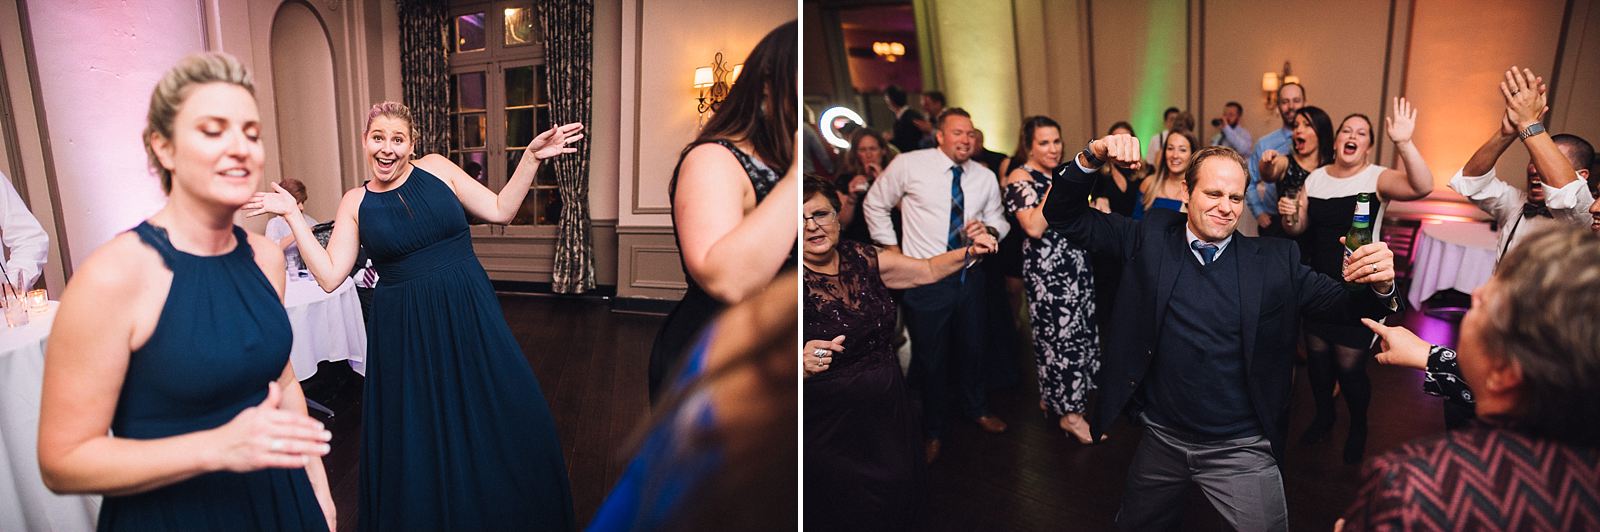 69 how do i photograph a reception - Salvatores Chicago Wedding Photos // Jen + Bob